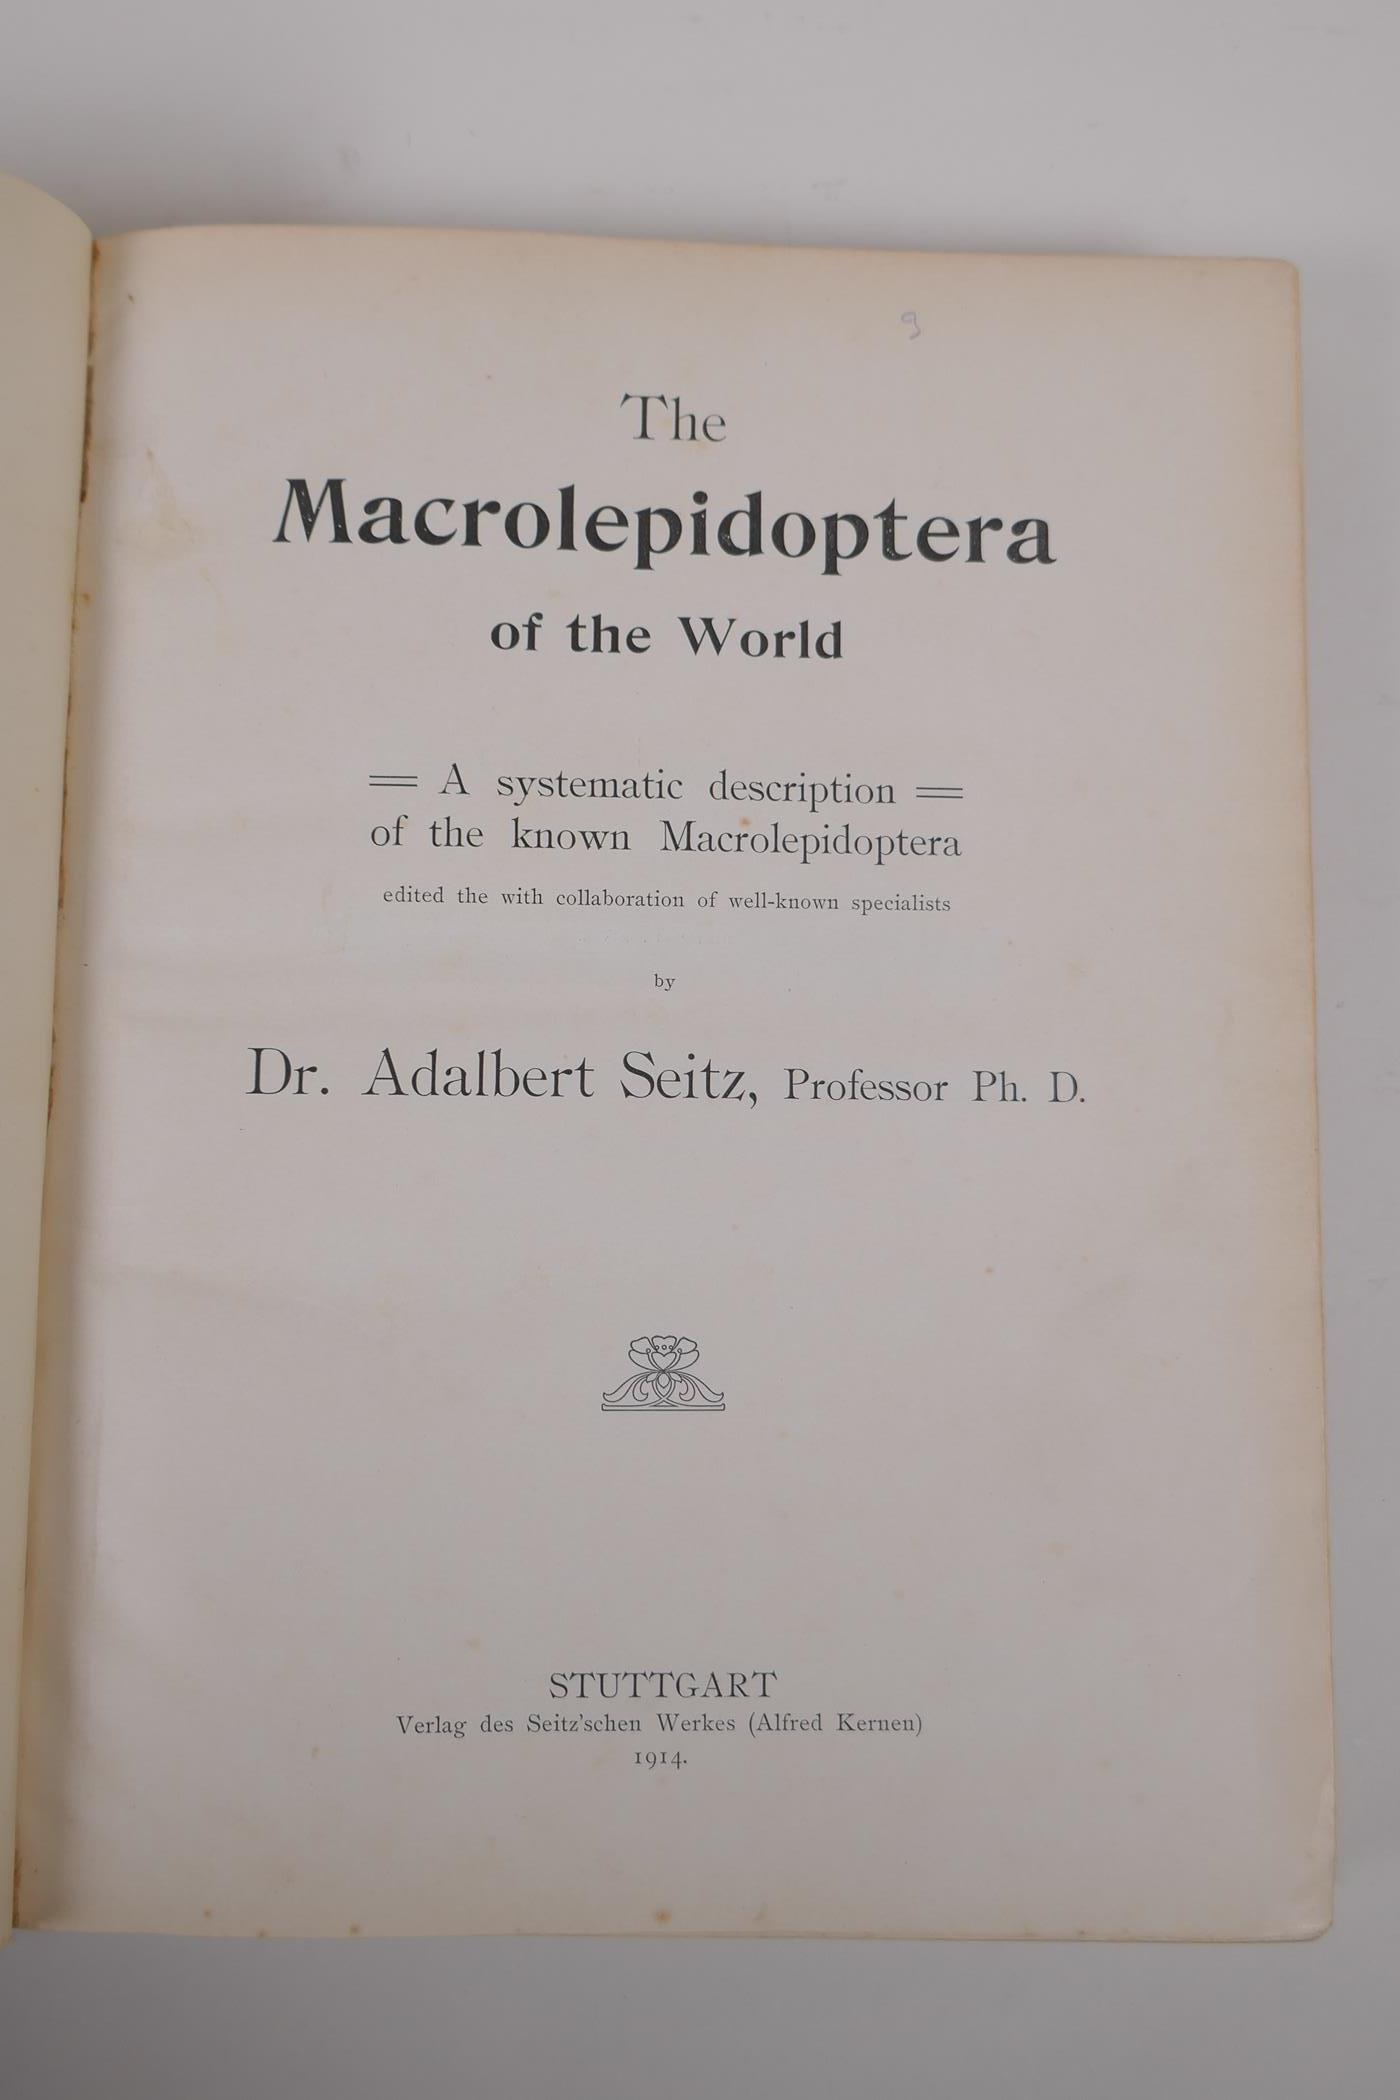 Dr Adalbert Seitz, The Macrolepidoptera of the World - The Macrolepidoptera of the Palearctic - Image 2 of 8